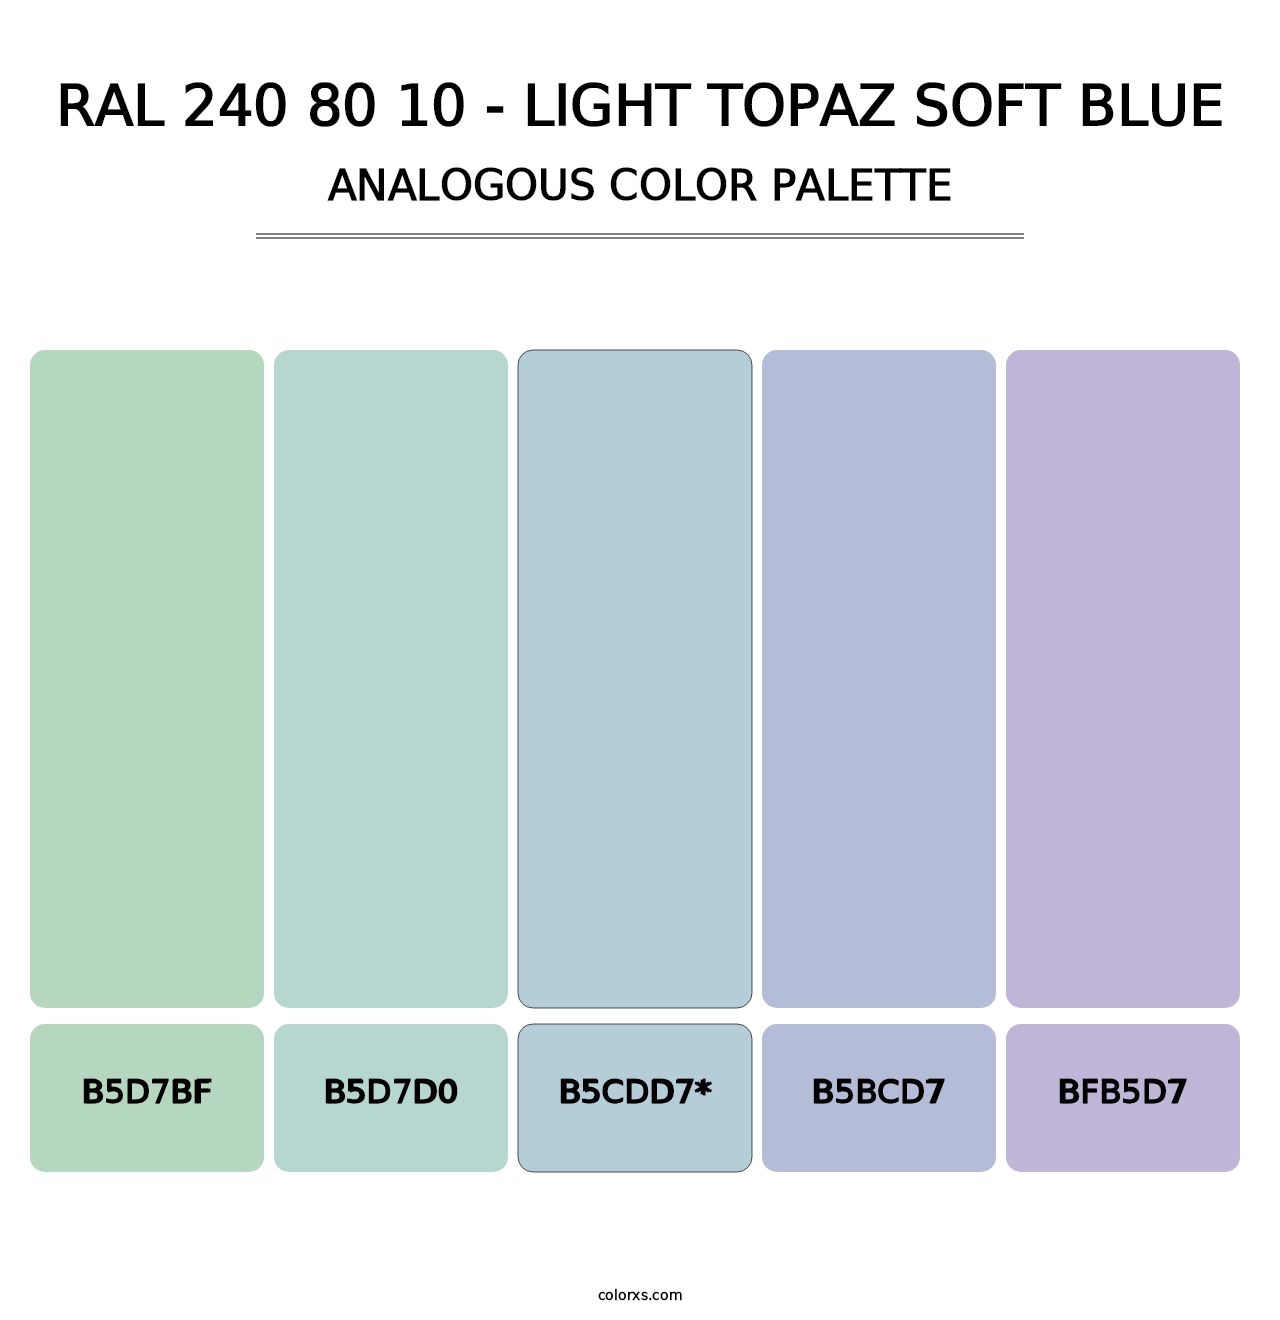 RAL 240 80 10 - Light Topaz Soft Blue - Analogous Color Palette